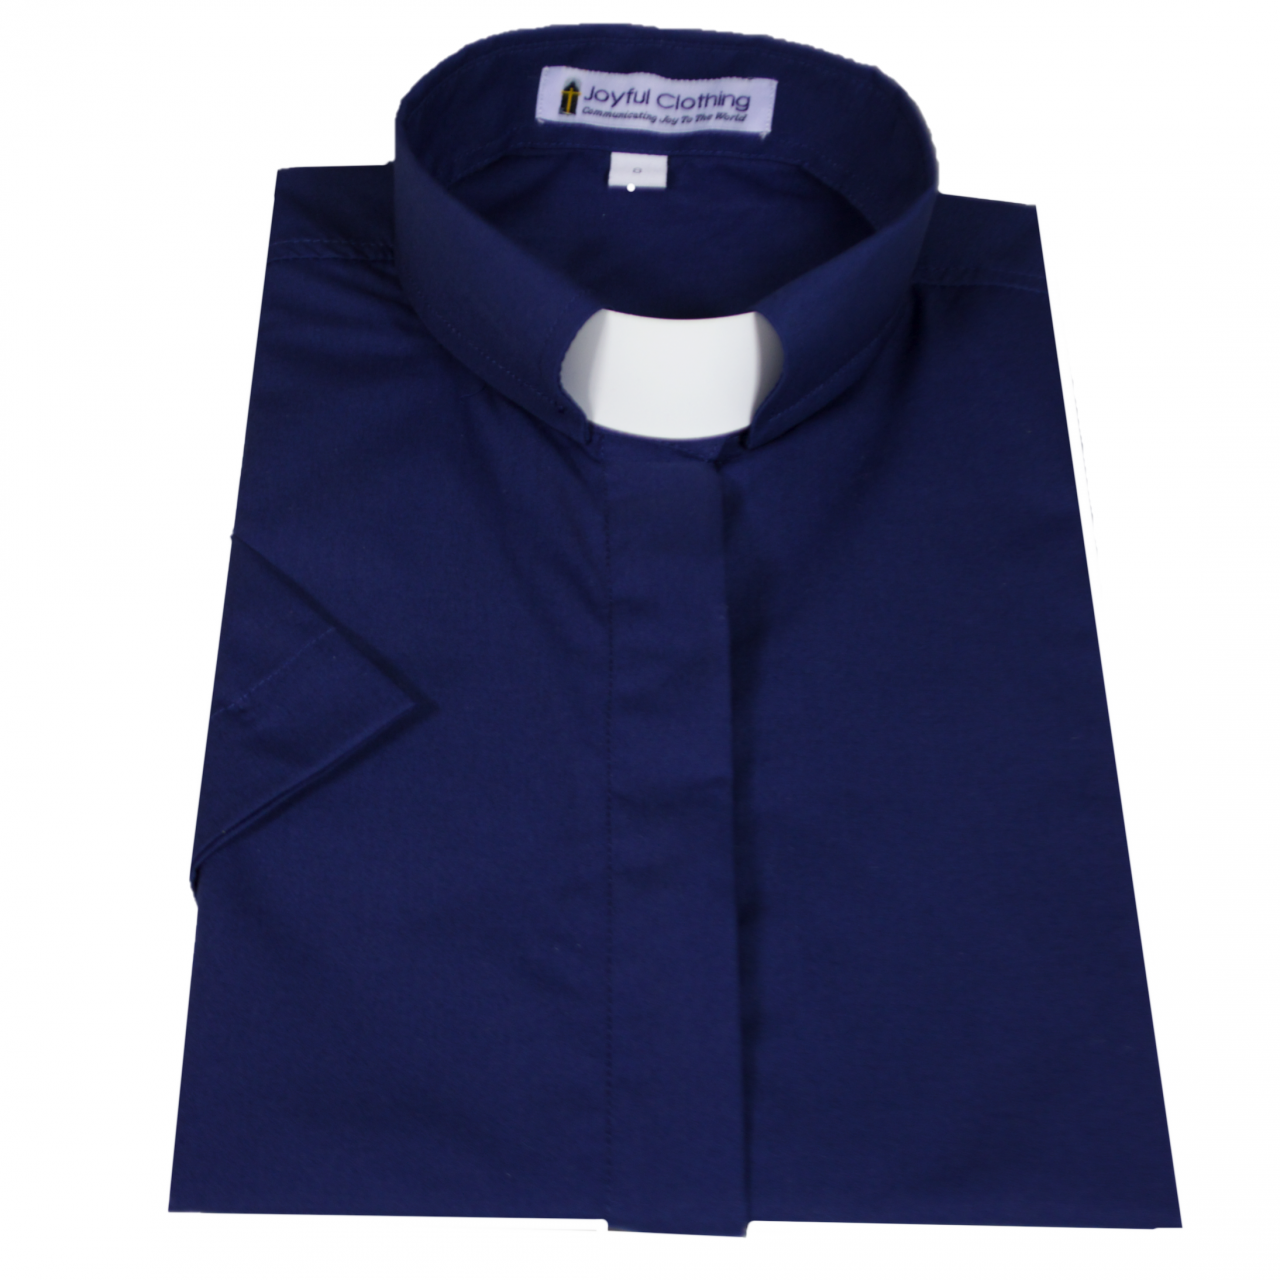 575. Women's Short-Sleeve Tab-Collar Clergy Shirt - Navy Blue